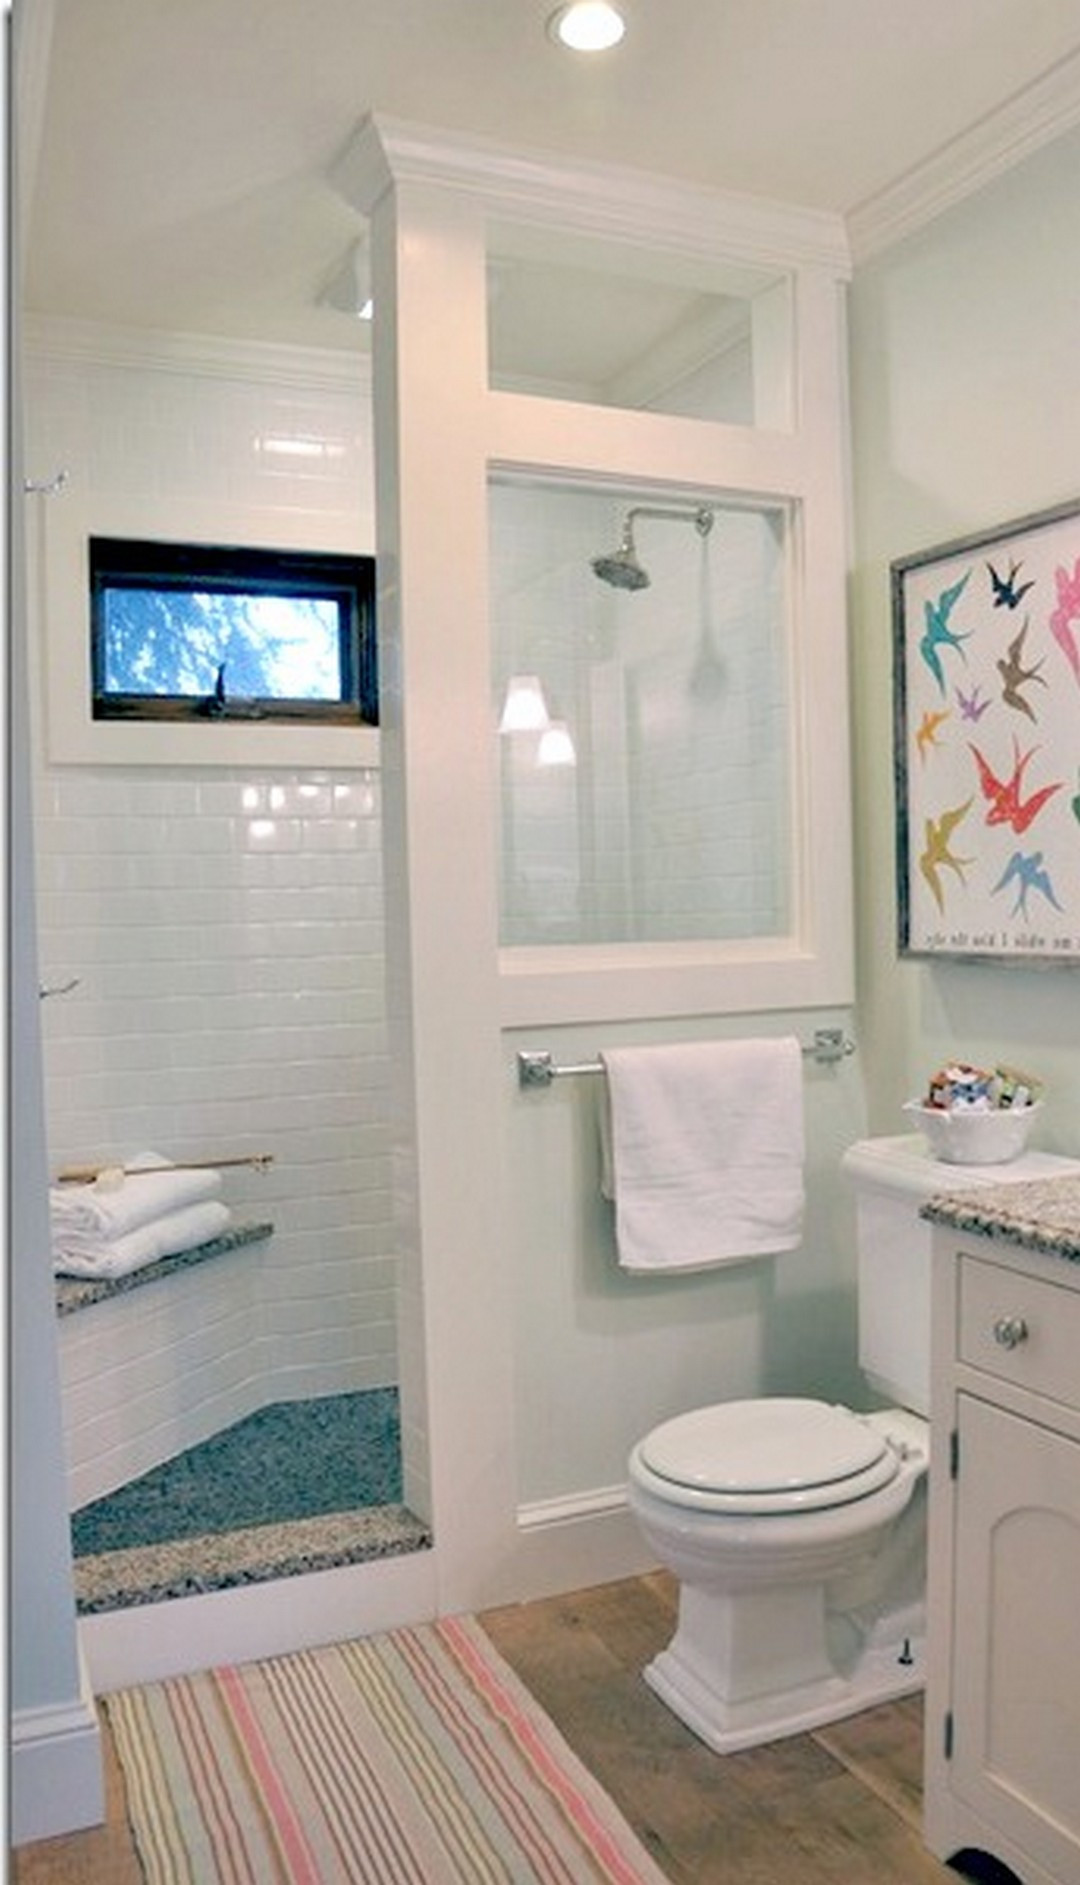 Small Bathroom Shower Ideas
 Elegant Small Bathroom Decorating Ideas 12 De agz